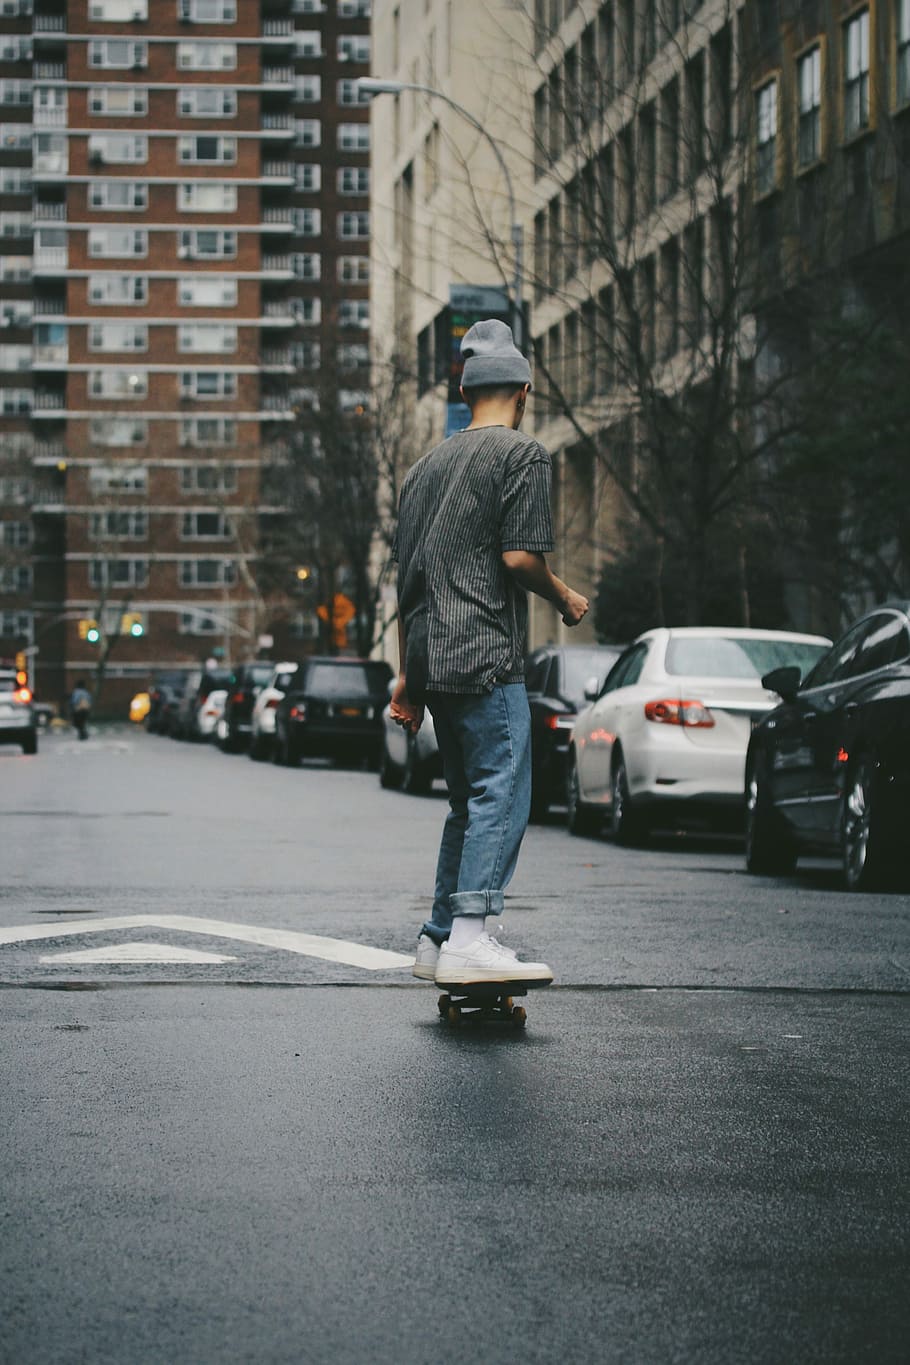 man riding skateboard near high rise building, man riding on skateboard